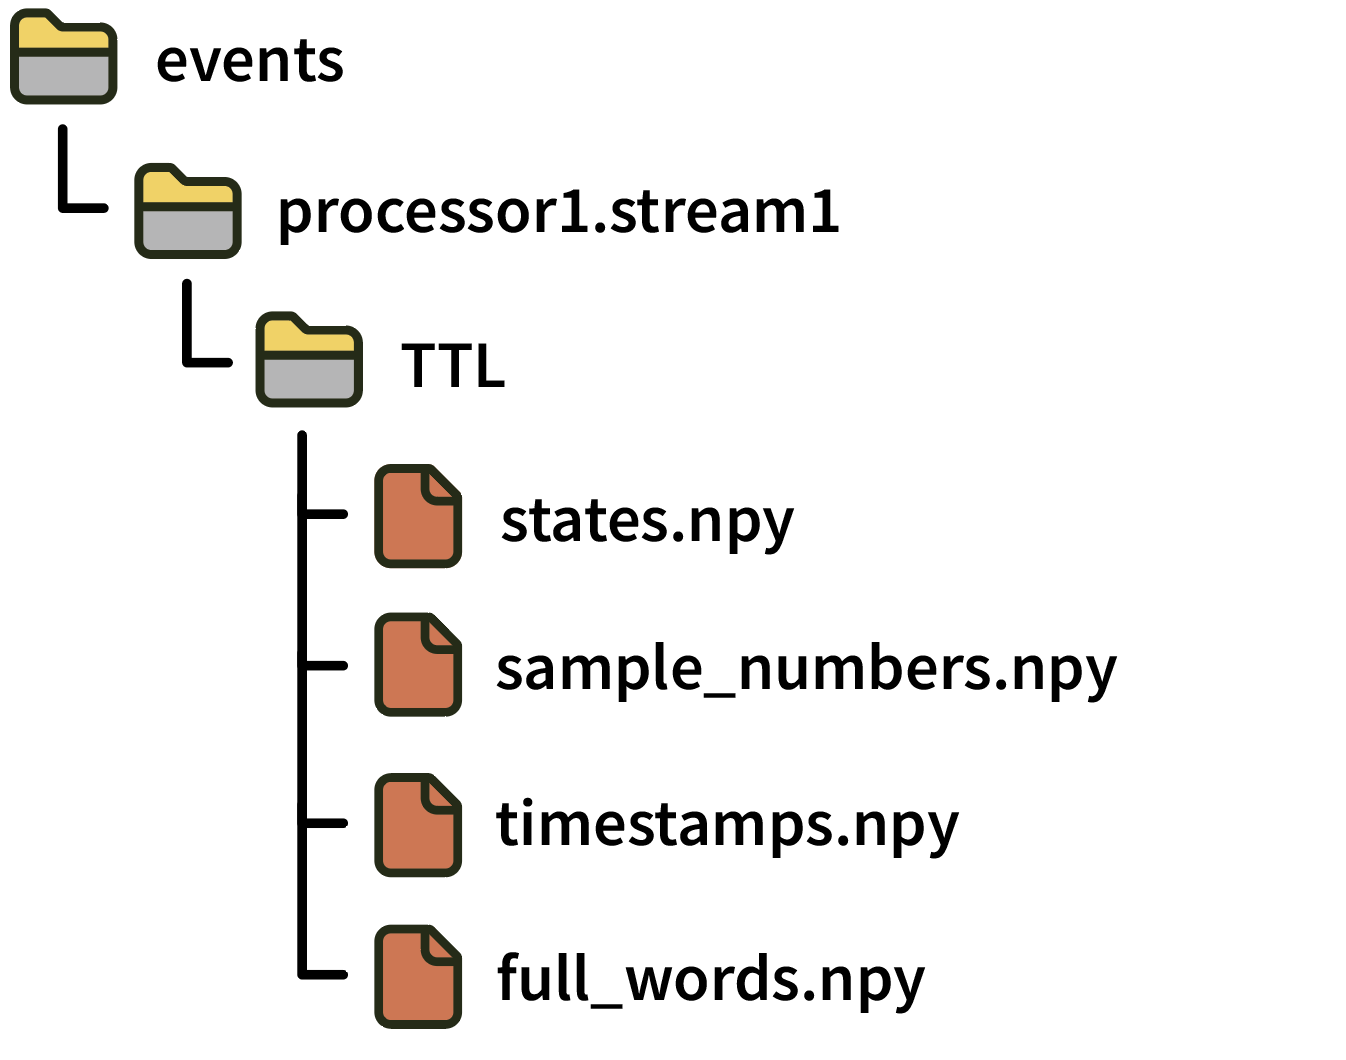 Binary data events format